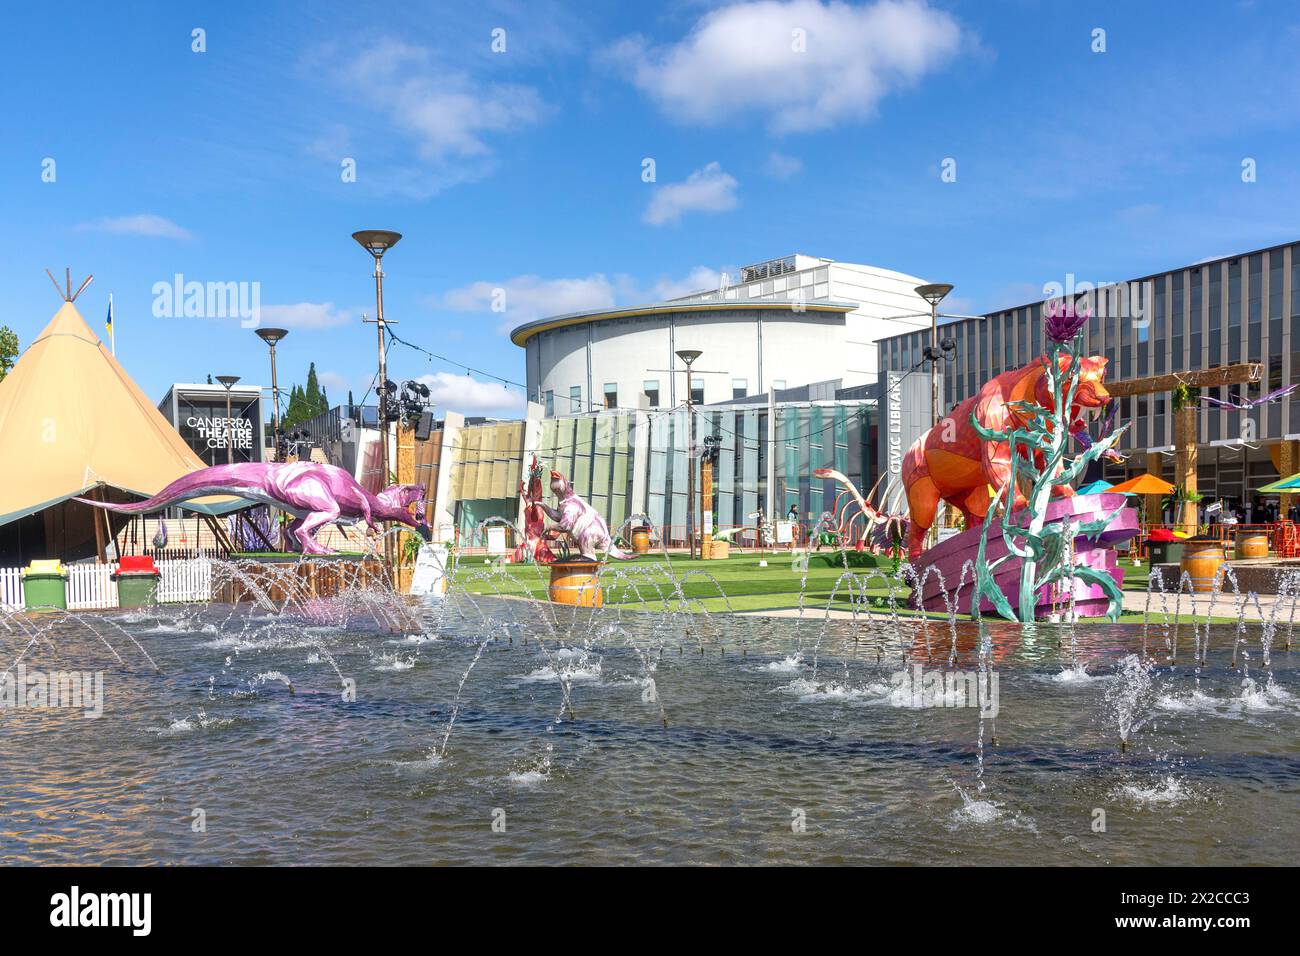 Freizeitpark mit Springbrunnen für Kinder, Civic Square, Central Canberra, Canberra, Australian Capital Territory, Australien Stockfoto